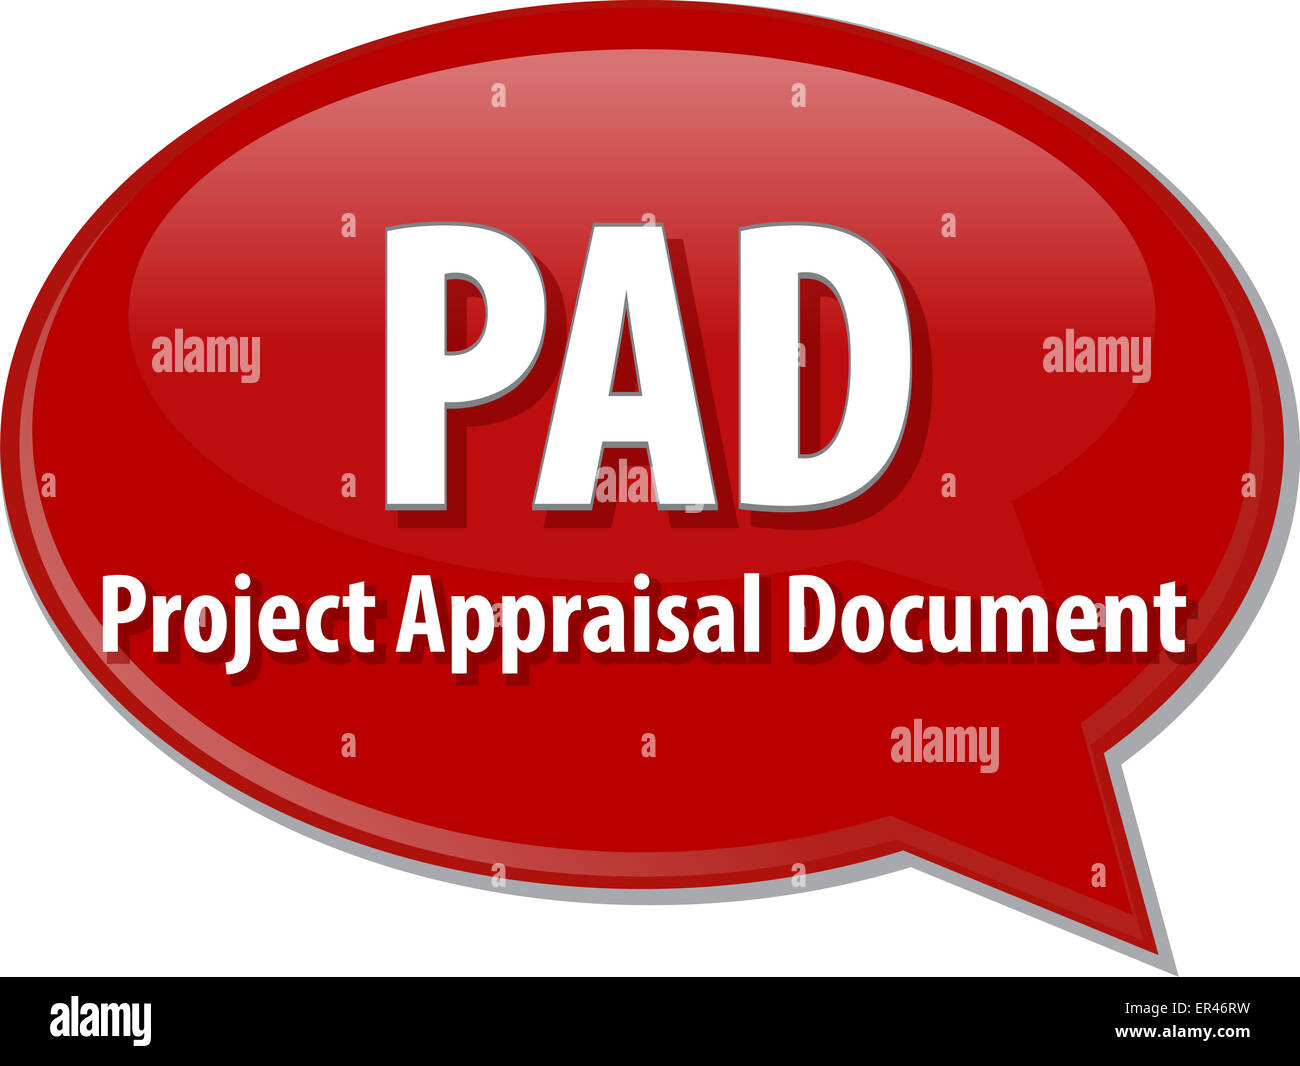 word speech bubble illustration of business acronym term PAD Project  Appraisal Document Stock Photo - Alamy